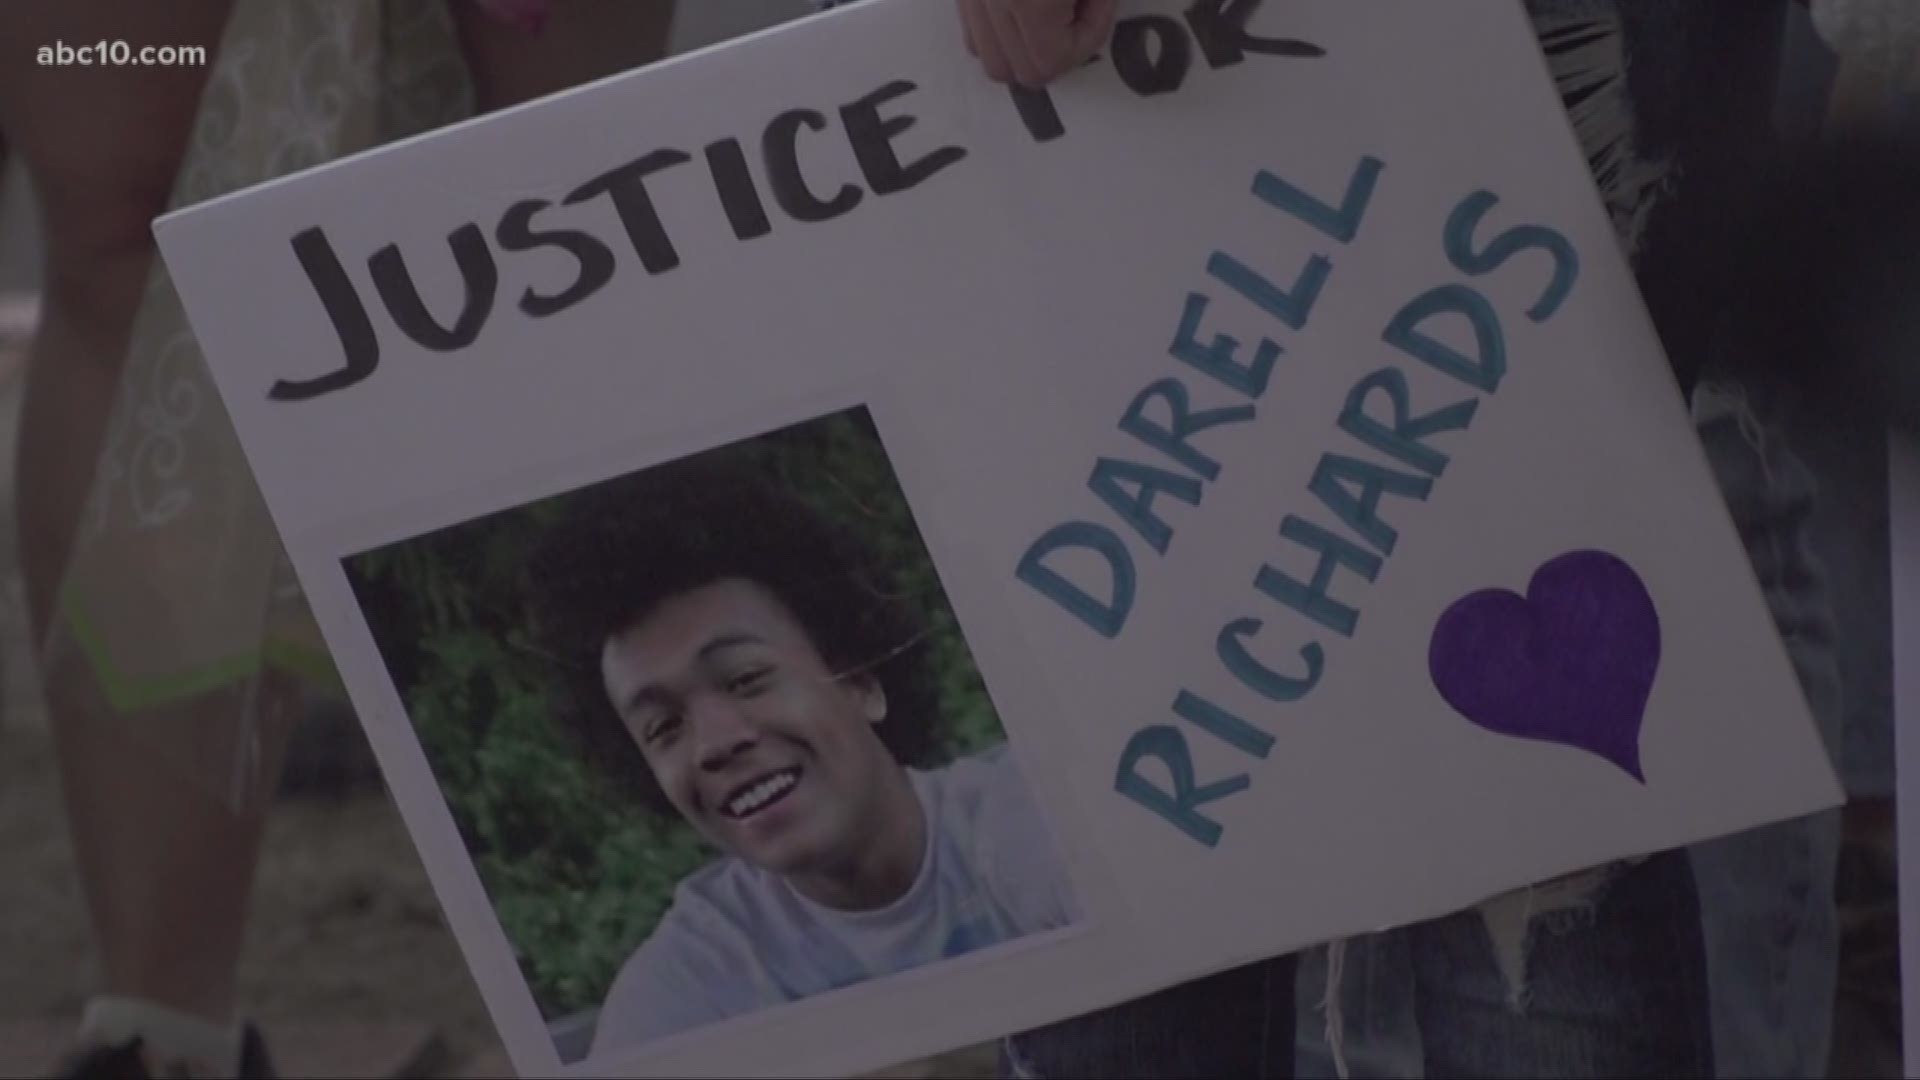 Black Lives Matter activists marched around Oak Park on Sunday, just days after Sacramento police shot and killed Darell Richards.